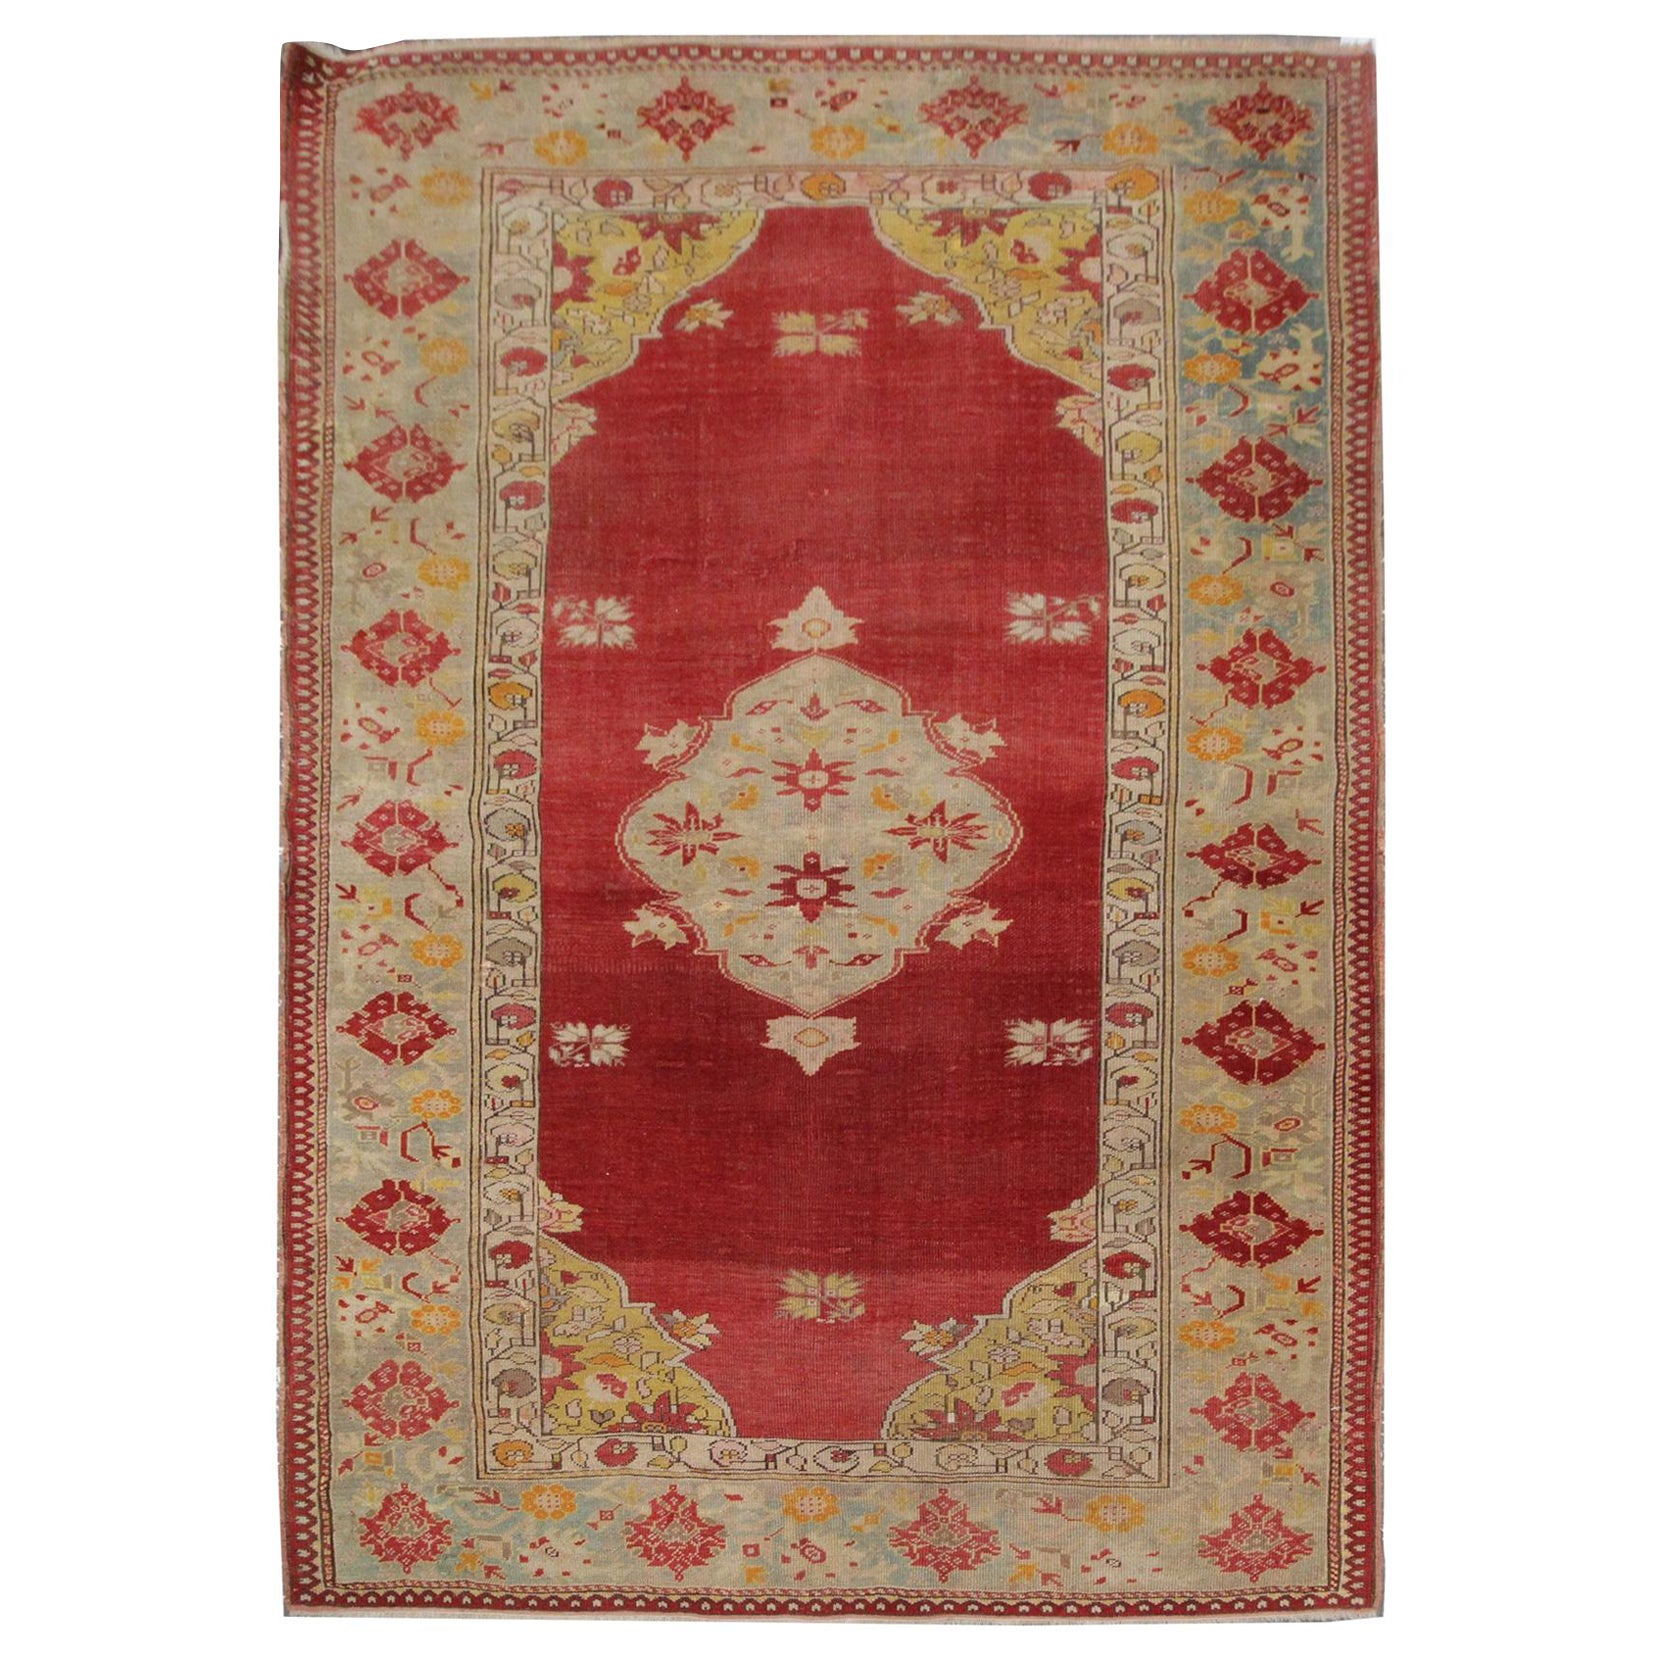 Antique Rug, Handmade Carpet Oriental Turkish Rug Red Wool Living Room Rugs For Sale